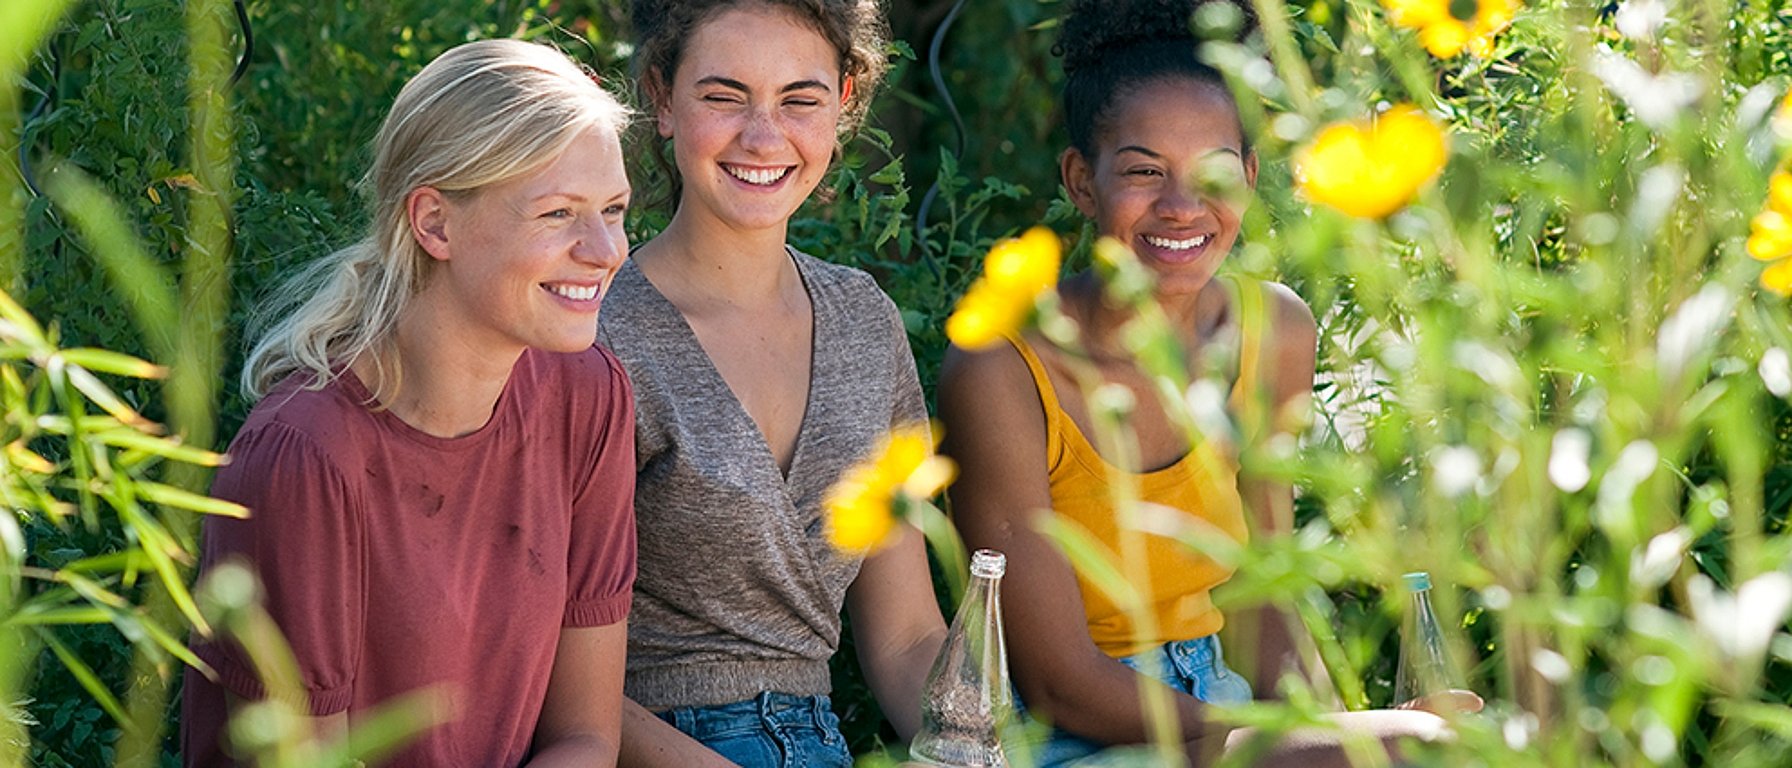 Three teen girls in a garden